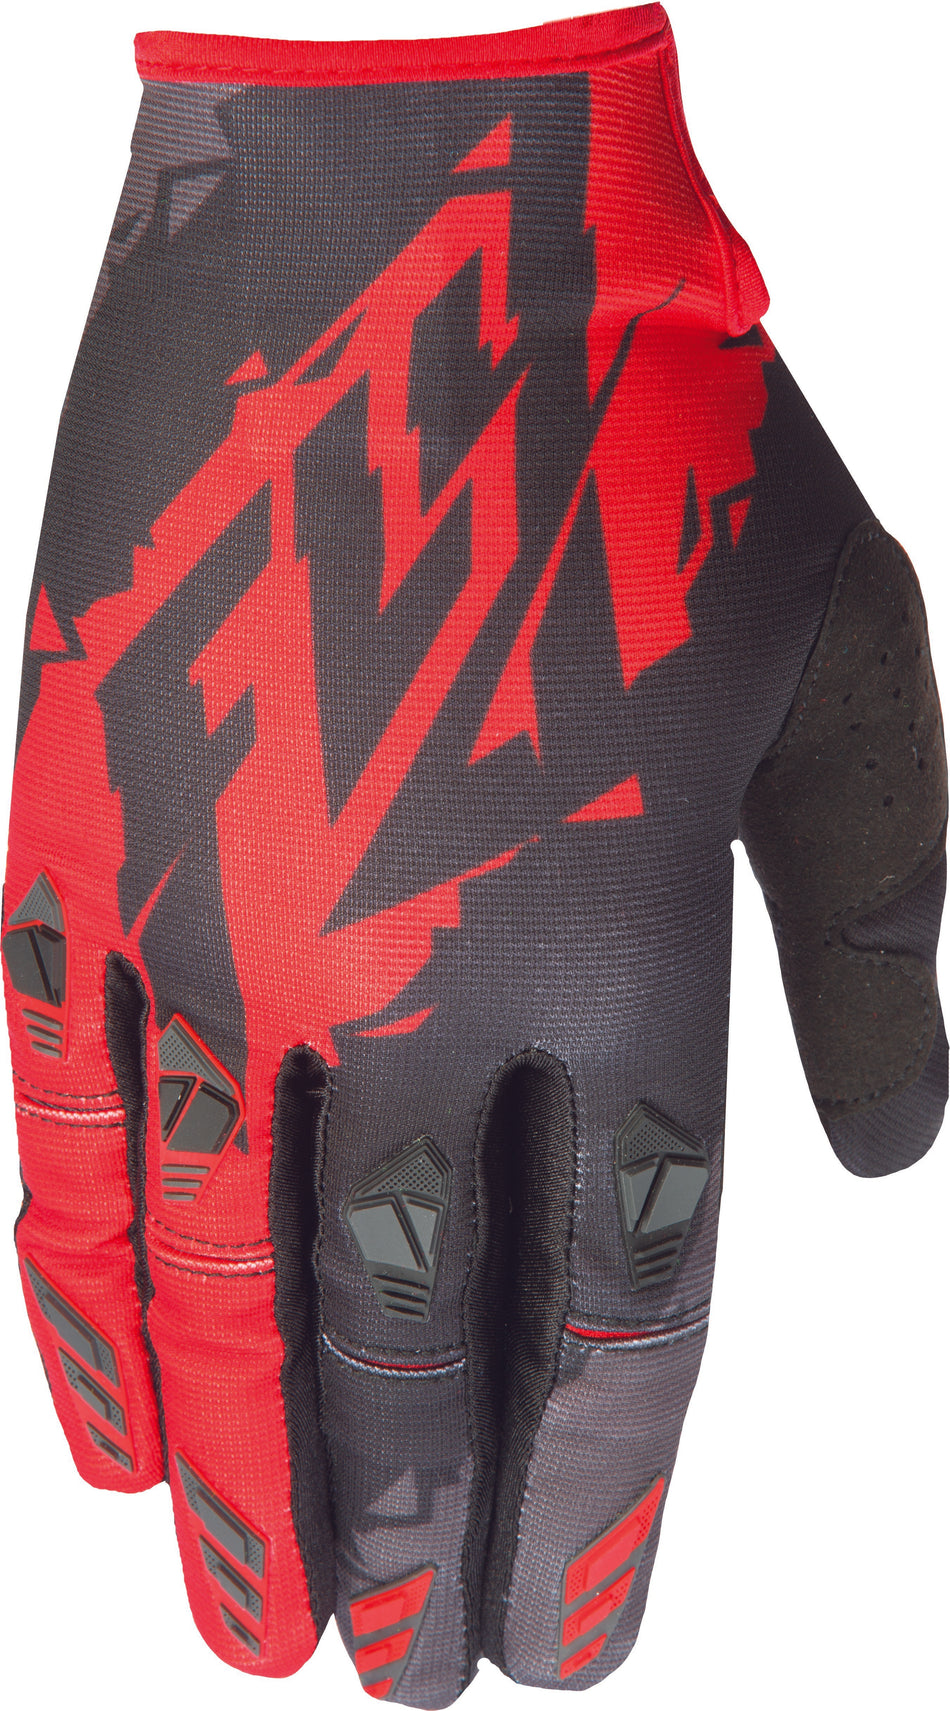 FLY RACING Kinetic Glove Black/Red Sz 8 S 370-41208